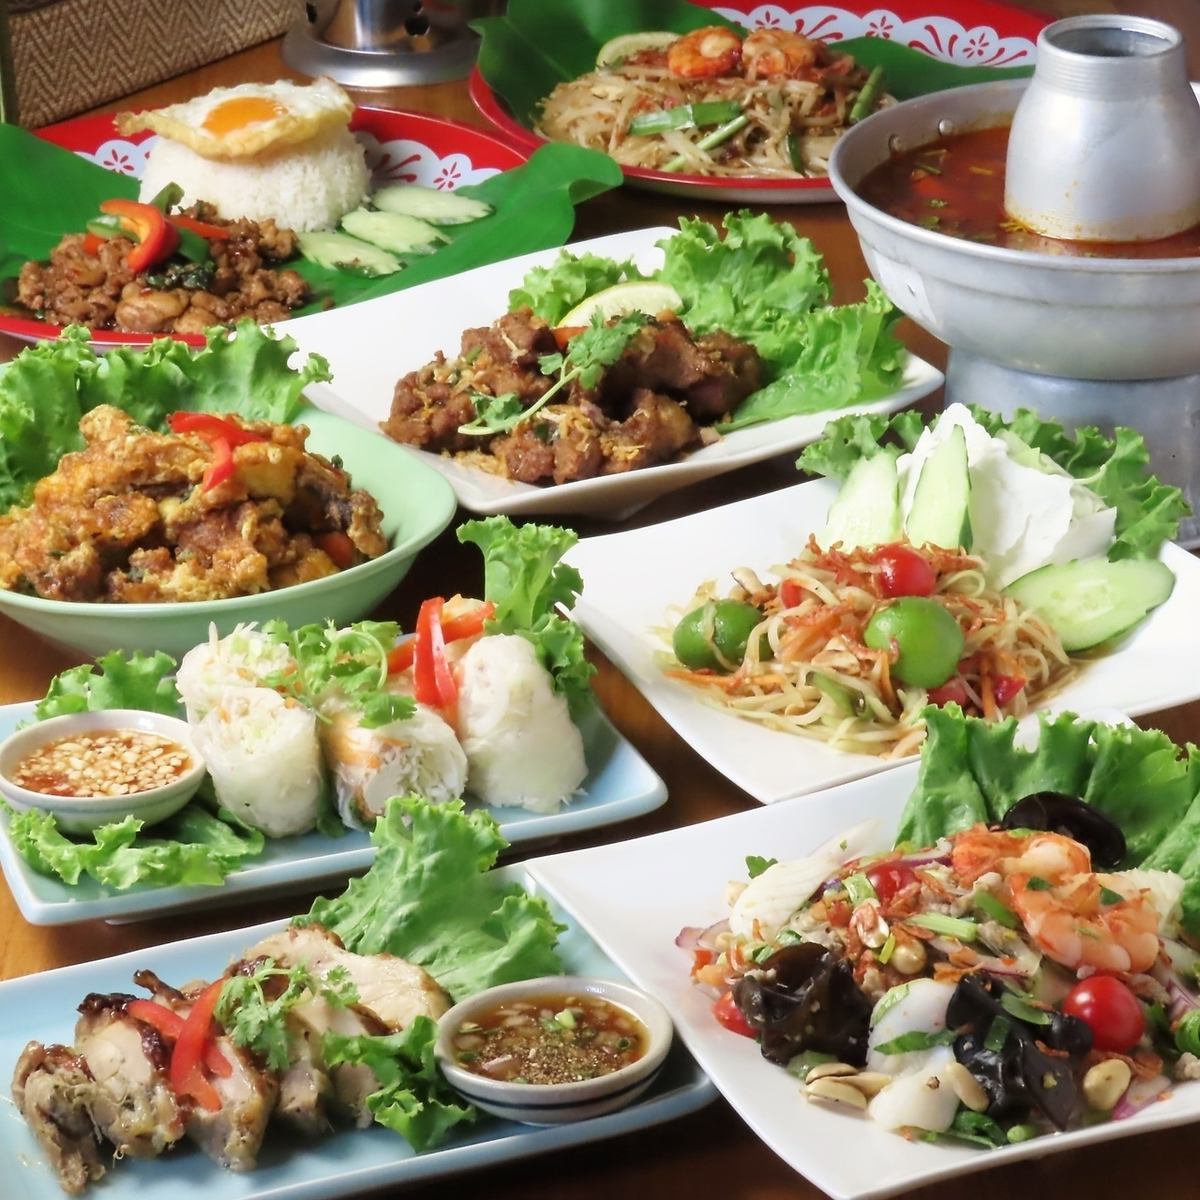 A new Thai restaurant opens in Kawagoe! A restaurant where you can enjoy authentic Thai cuisine★